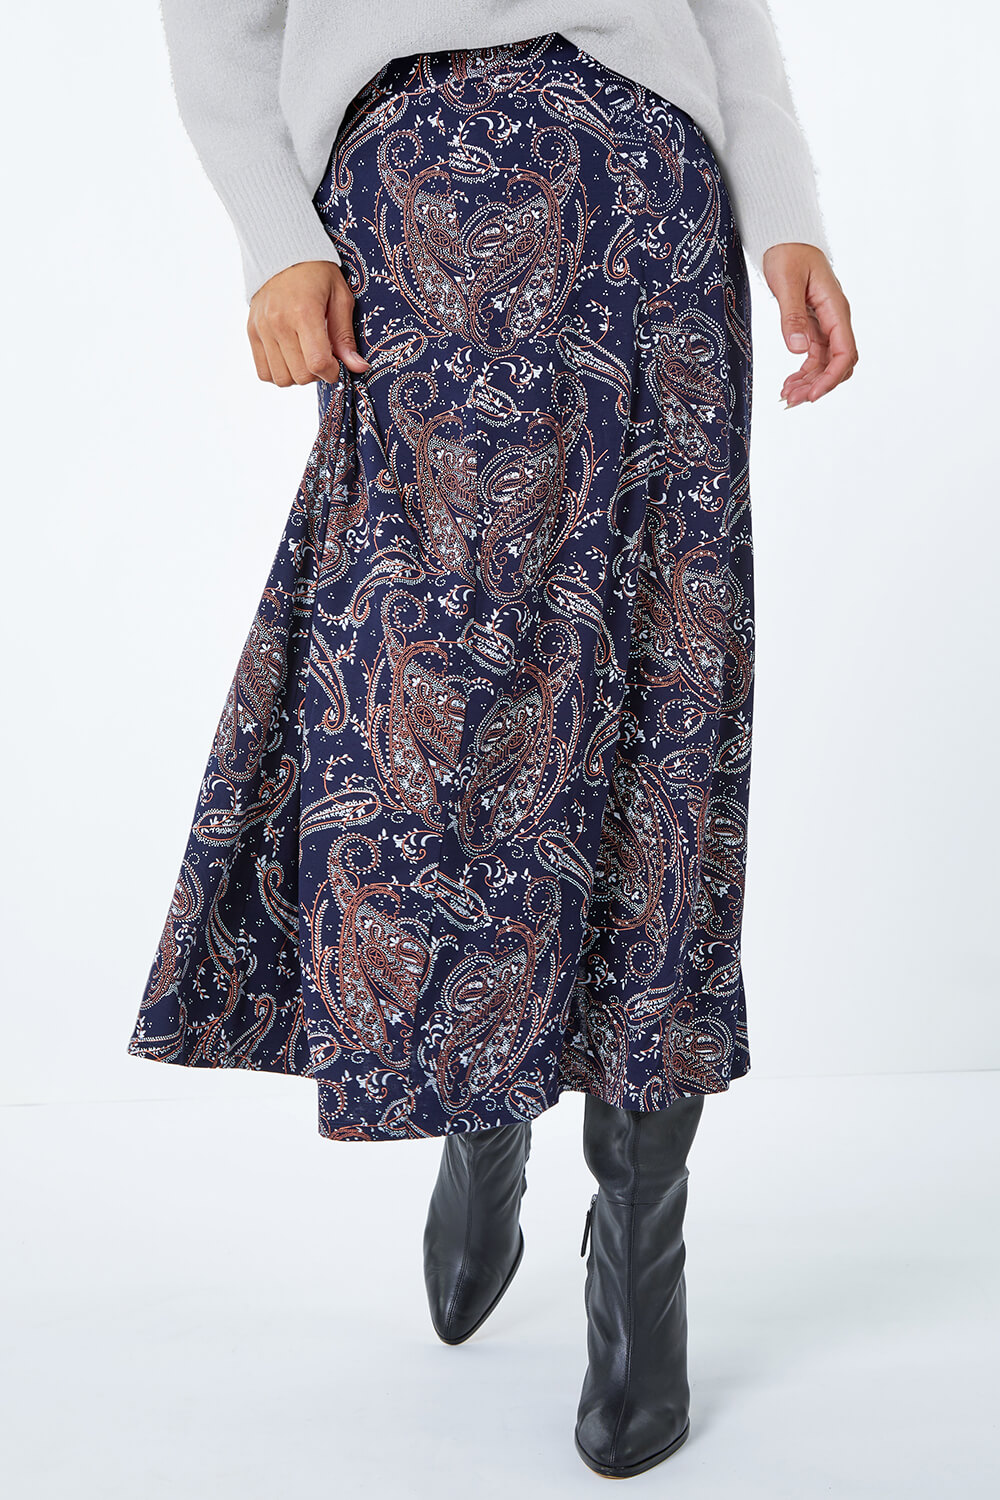 Paisley Print Stretch Midi Skirt in Midnight Blue - Roman Originals UK